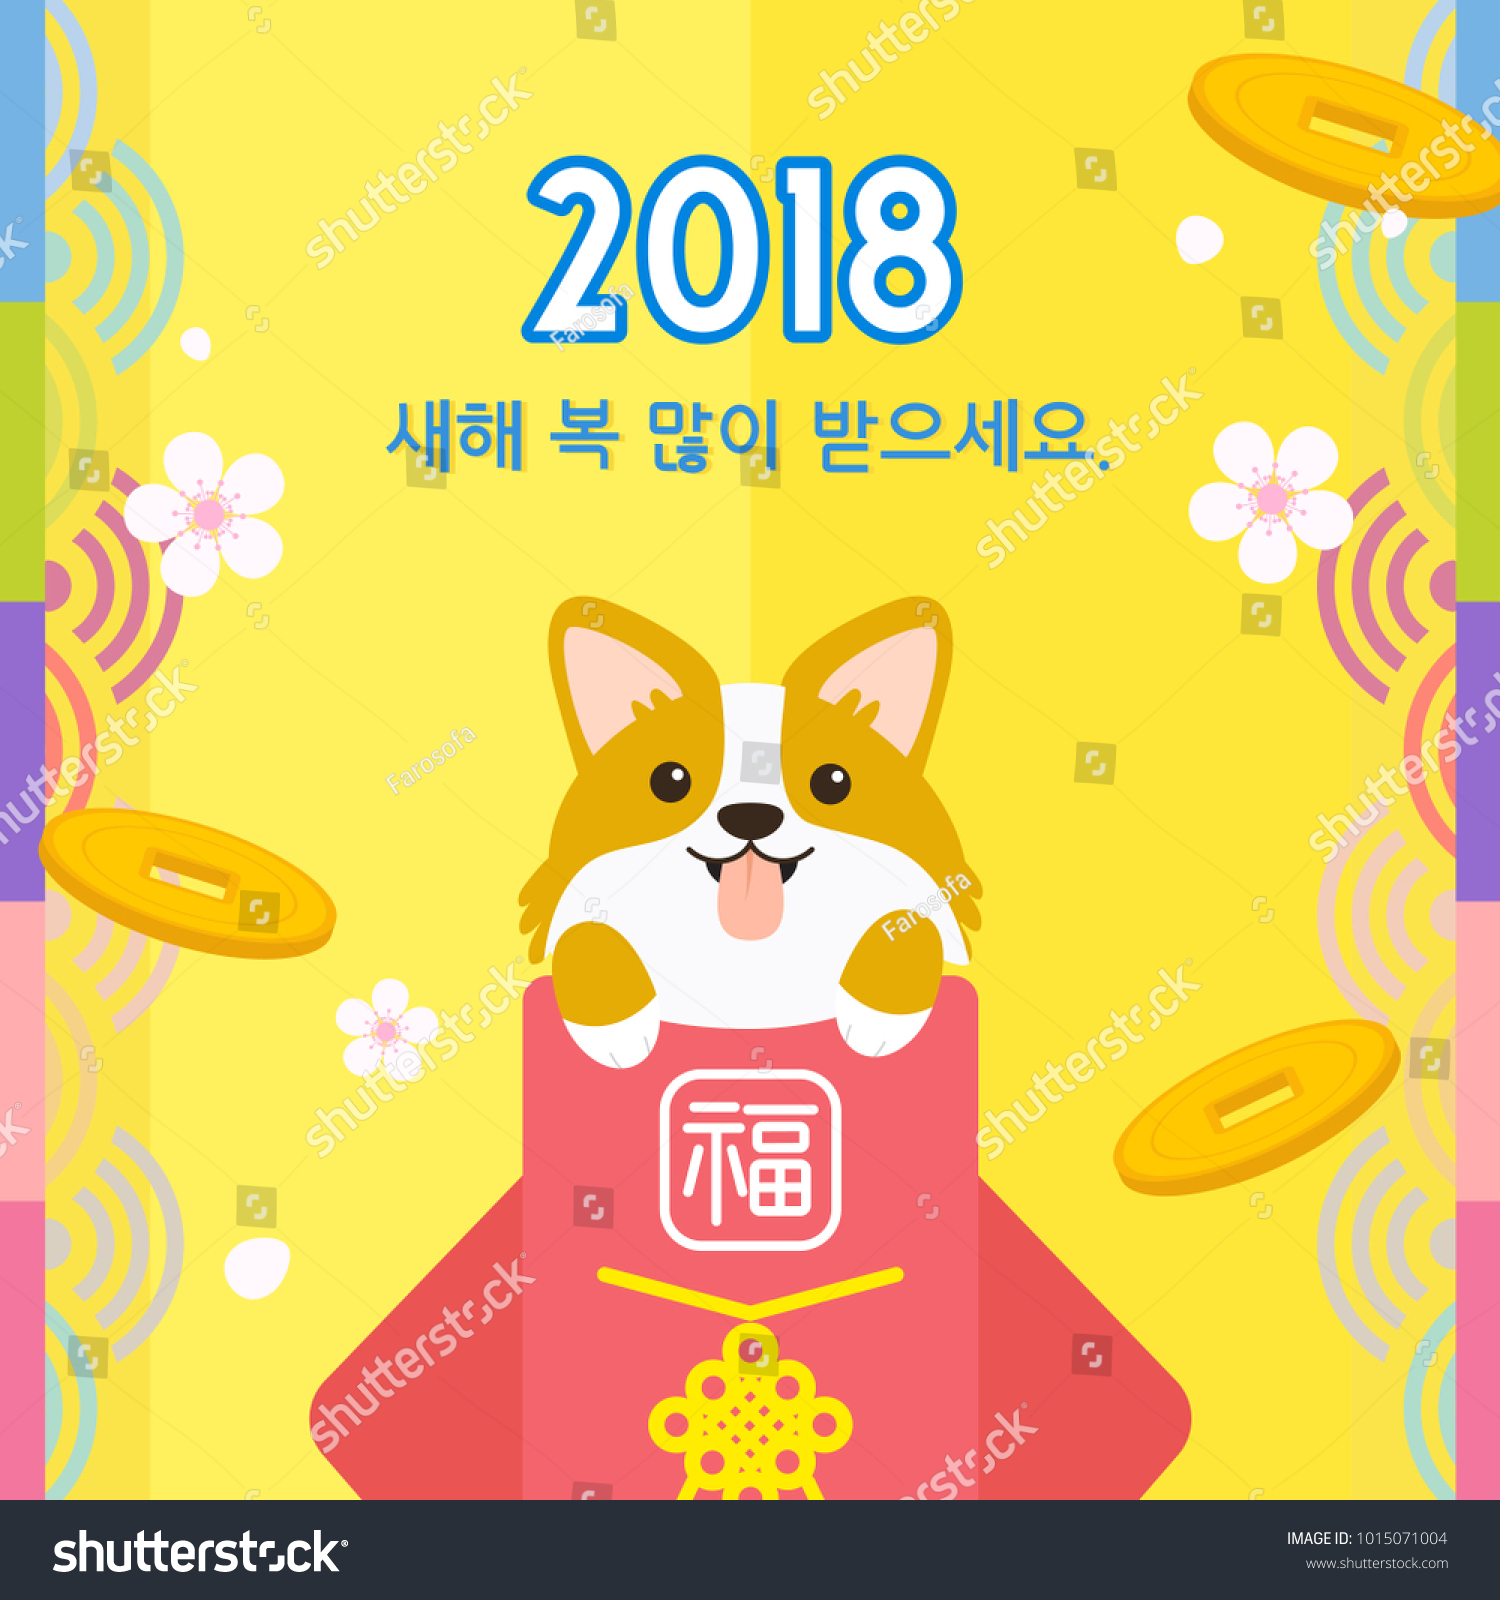 Seollal Korean Lunar New Year Vector Stock Vector (Royalty Free